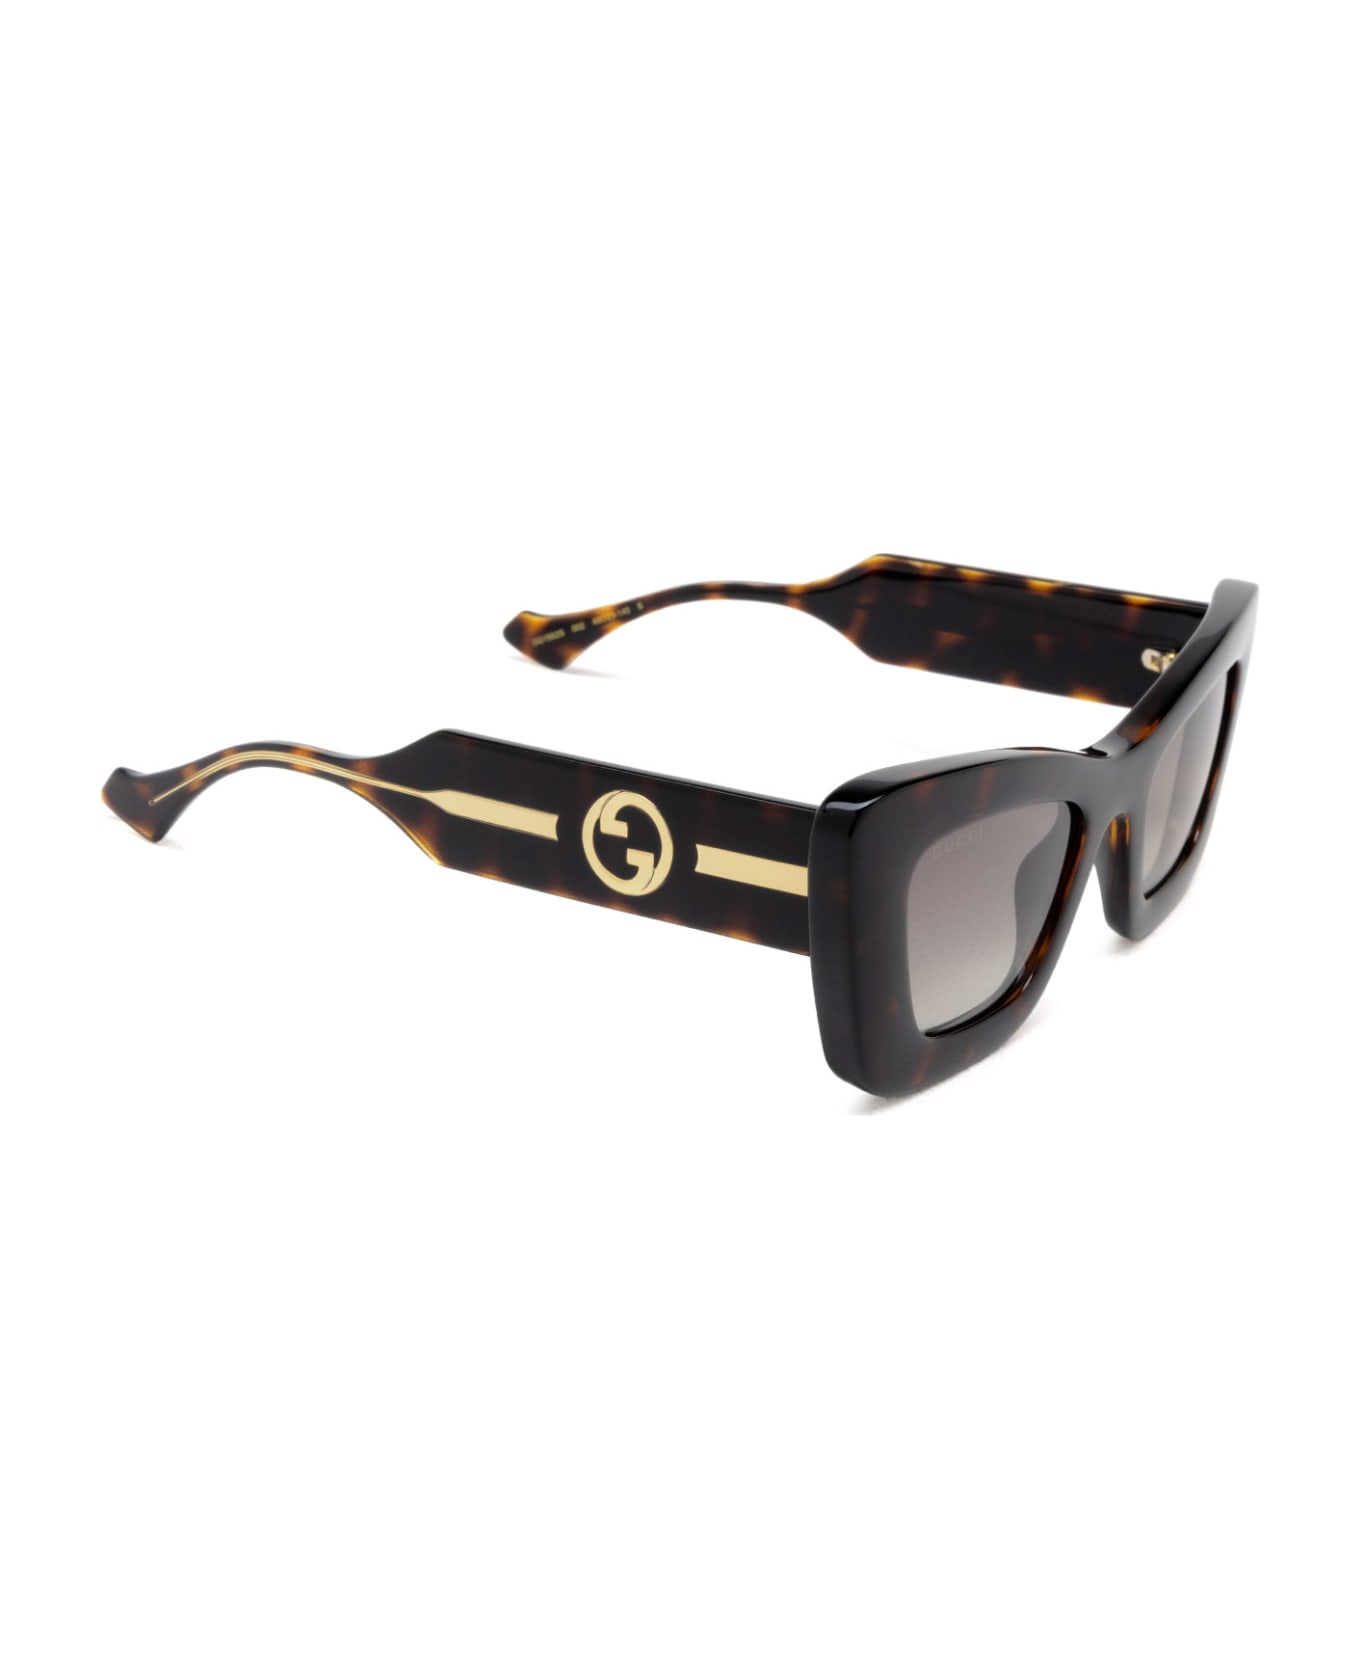 Gucci Eyewear Gg1552s Havana Sunglasses - Havana サングラス